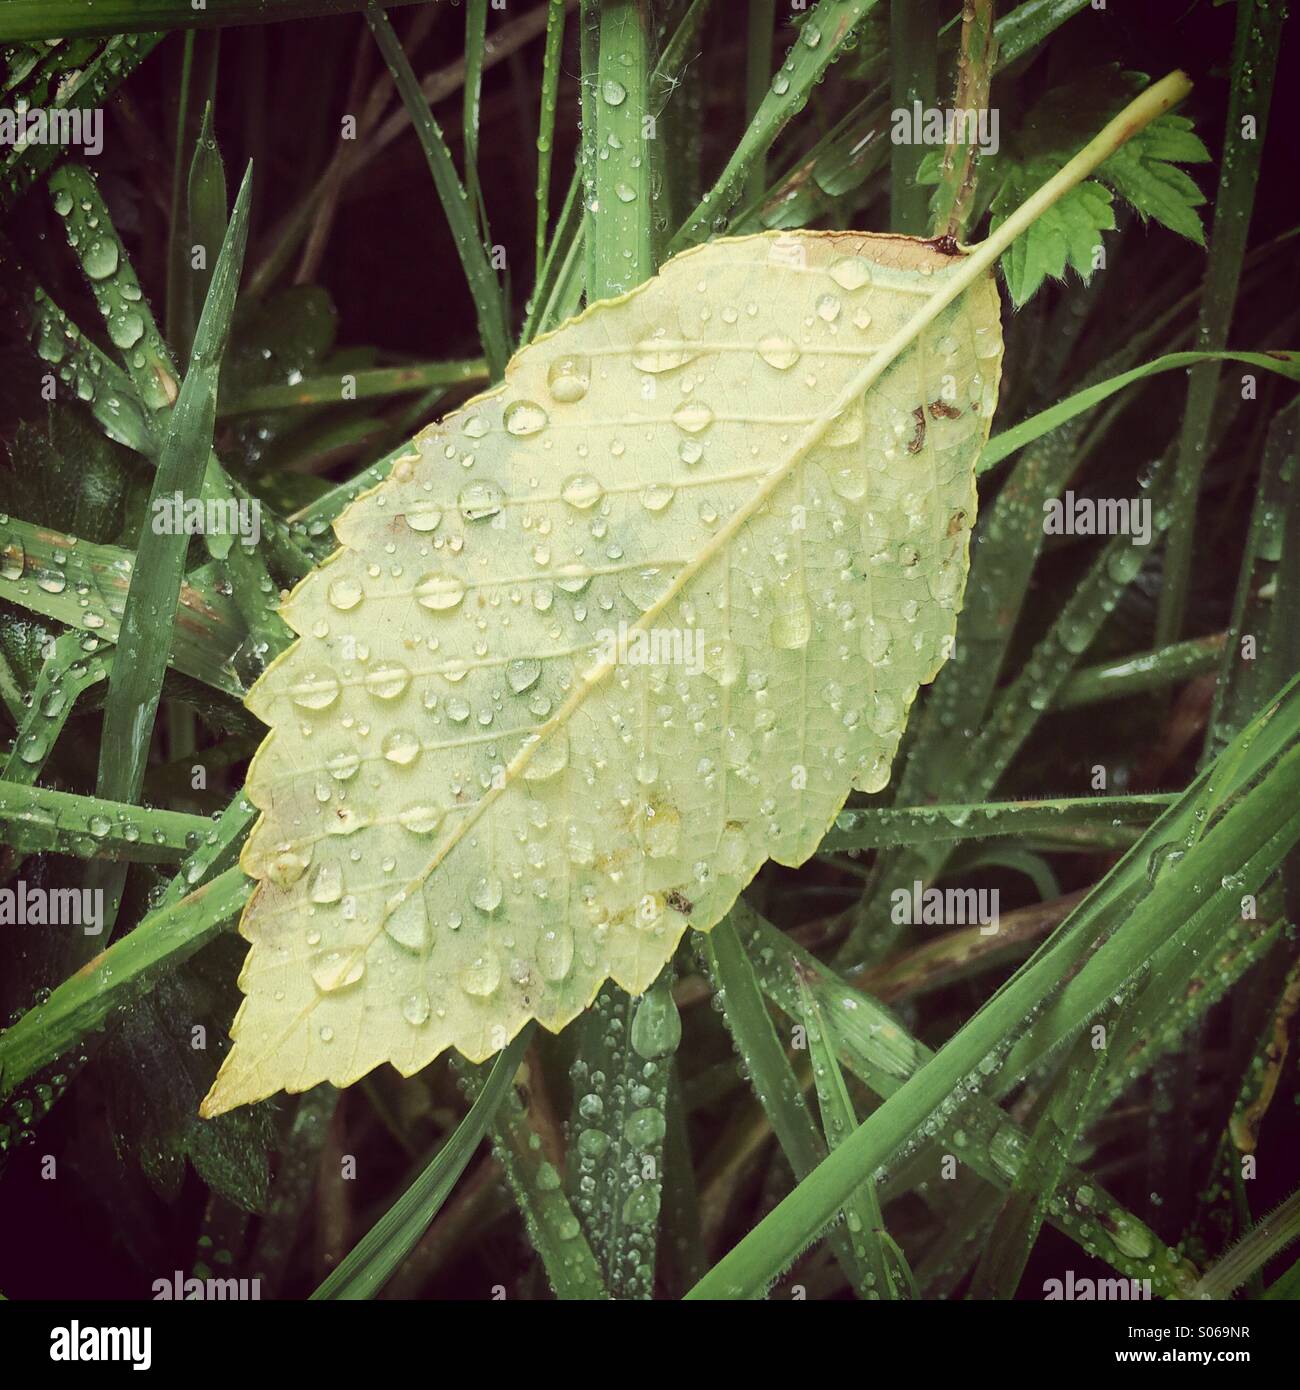 Raindrops on fallen Leaves, Olympic Peninsula, Washington Stock Photo